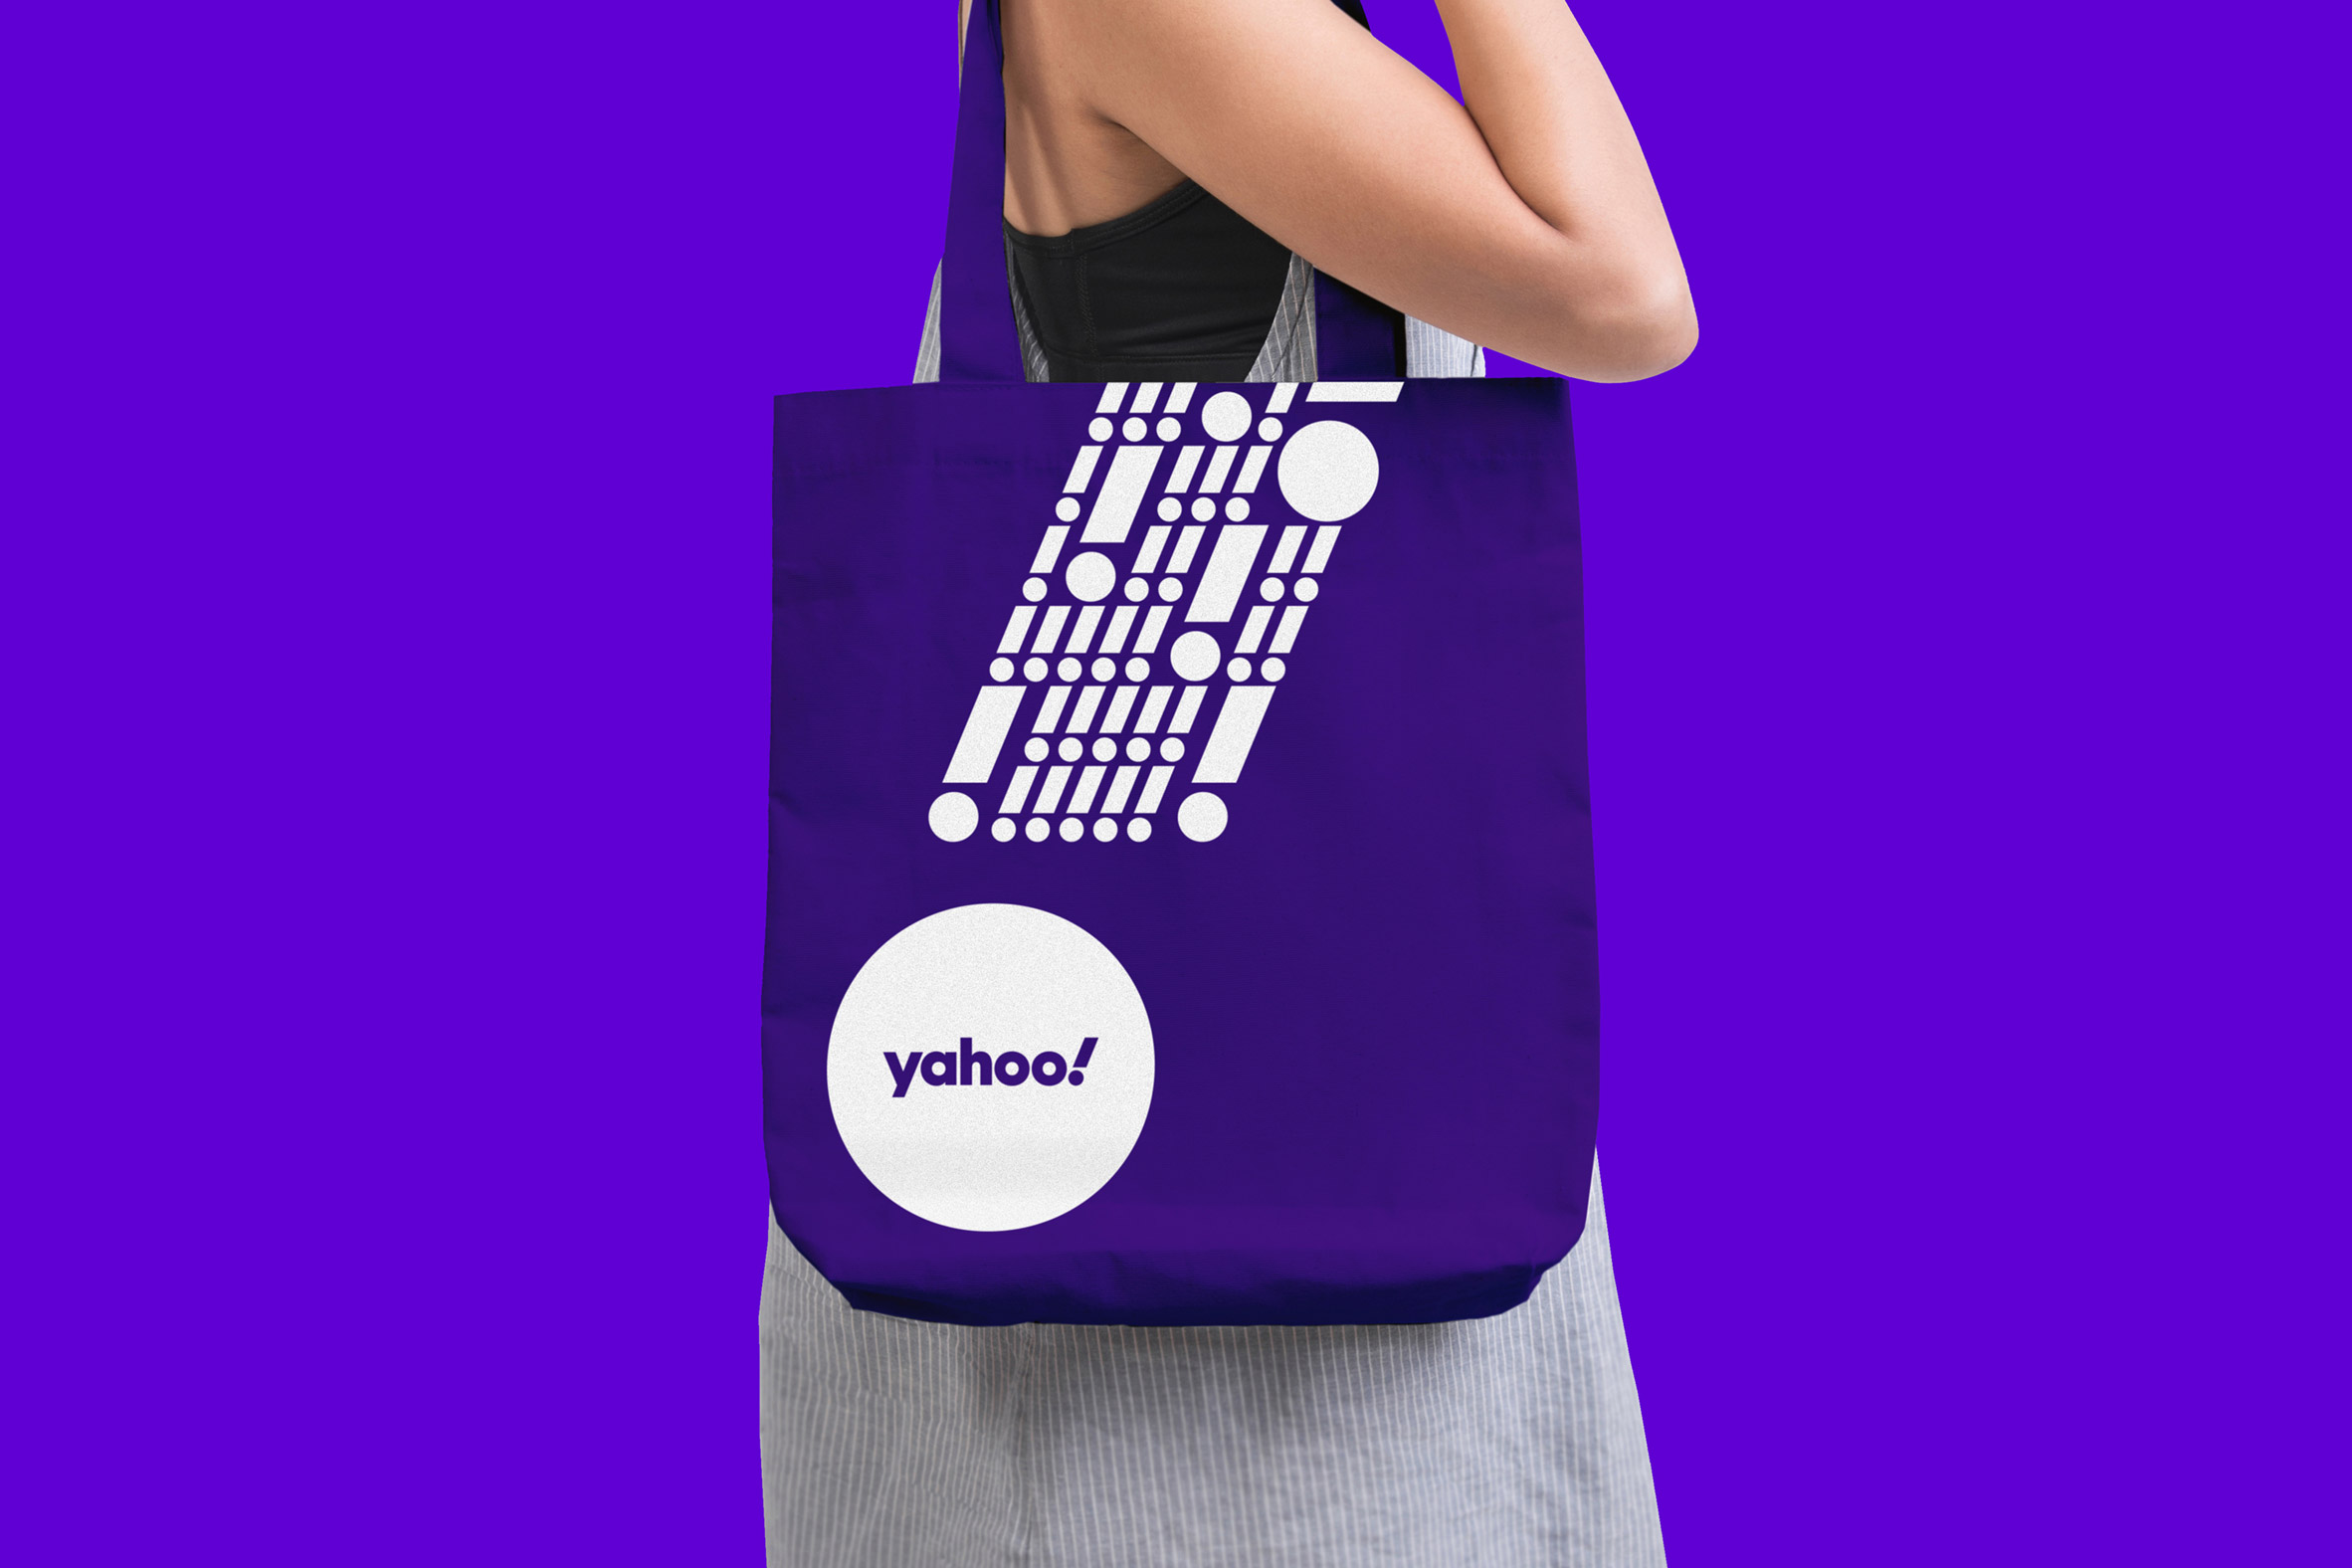 A - Yahoo Shopping